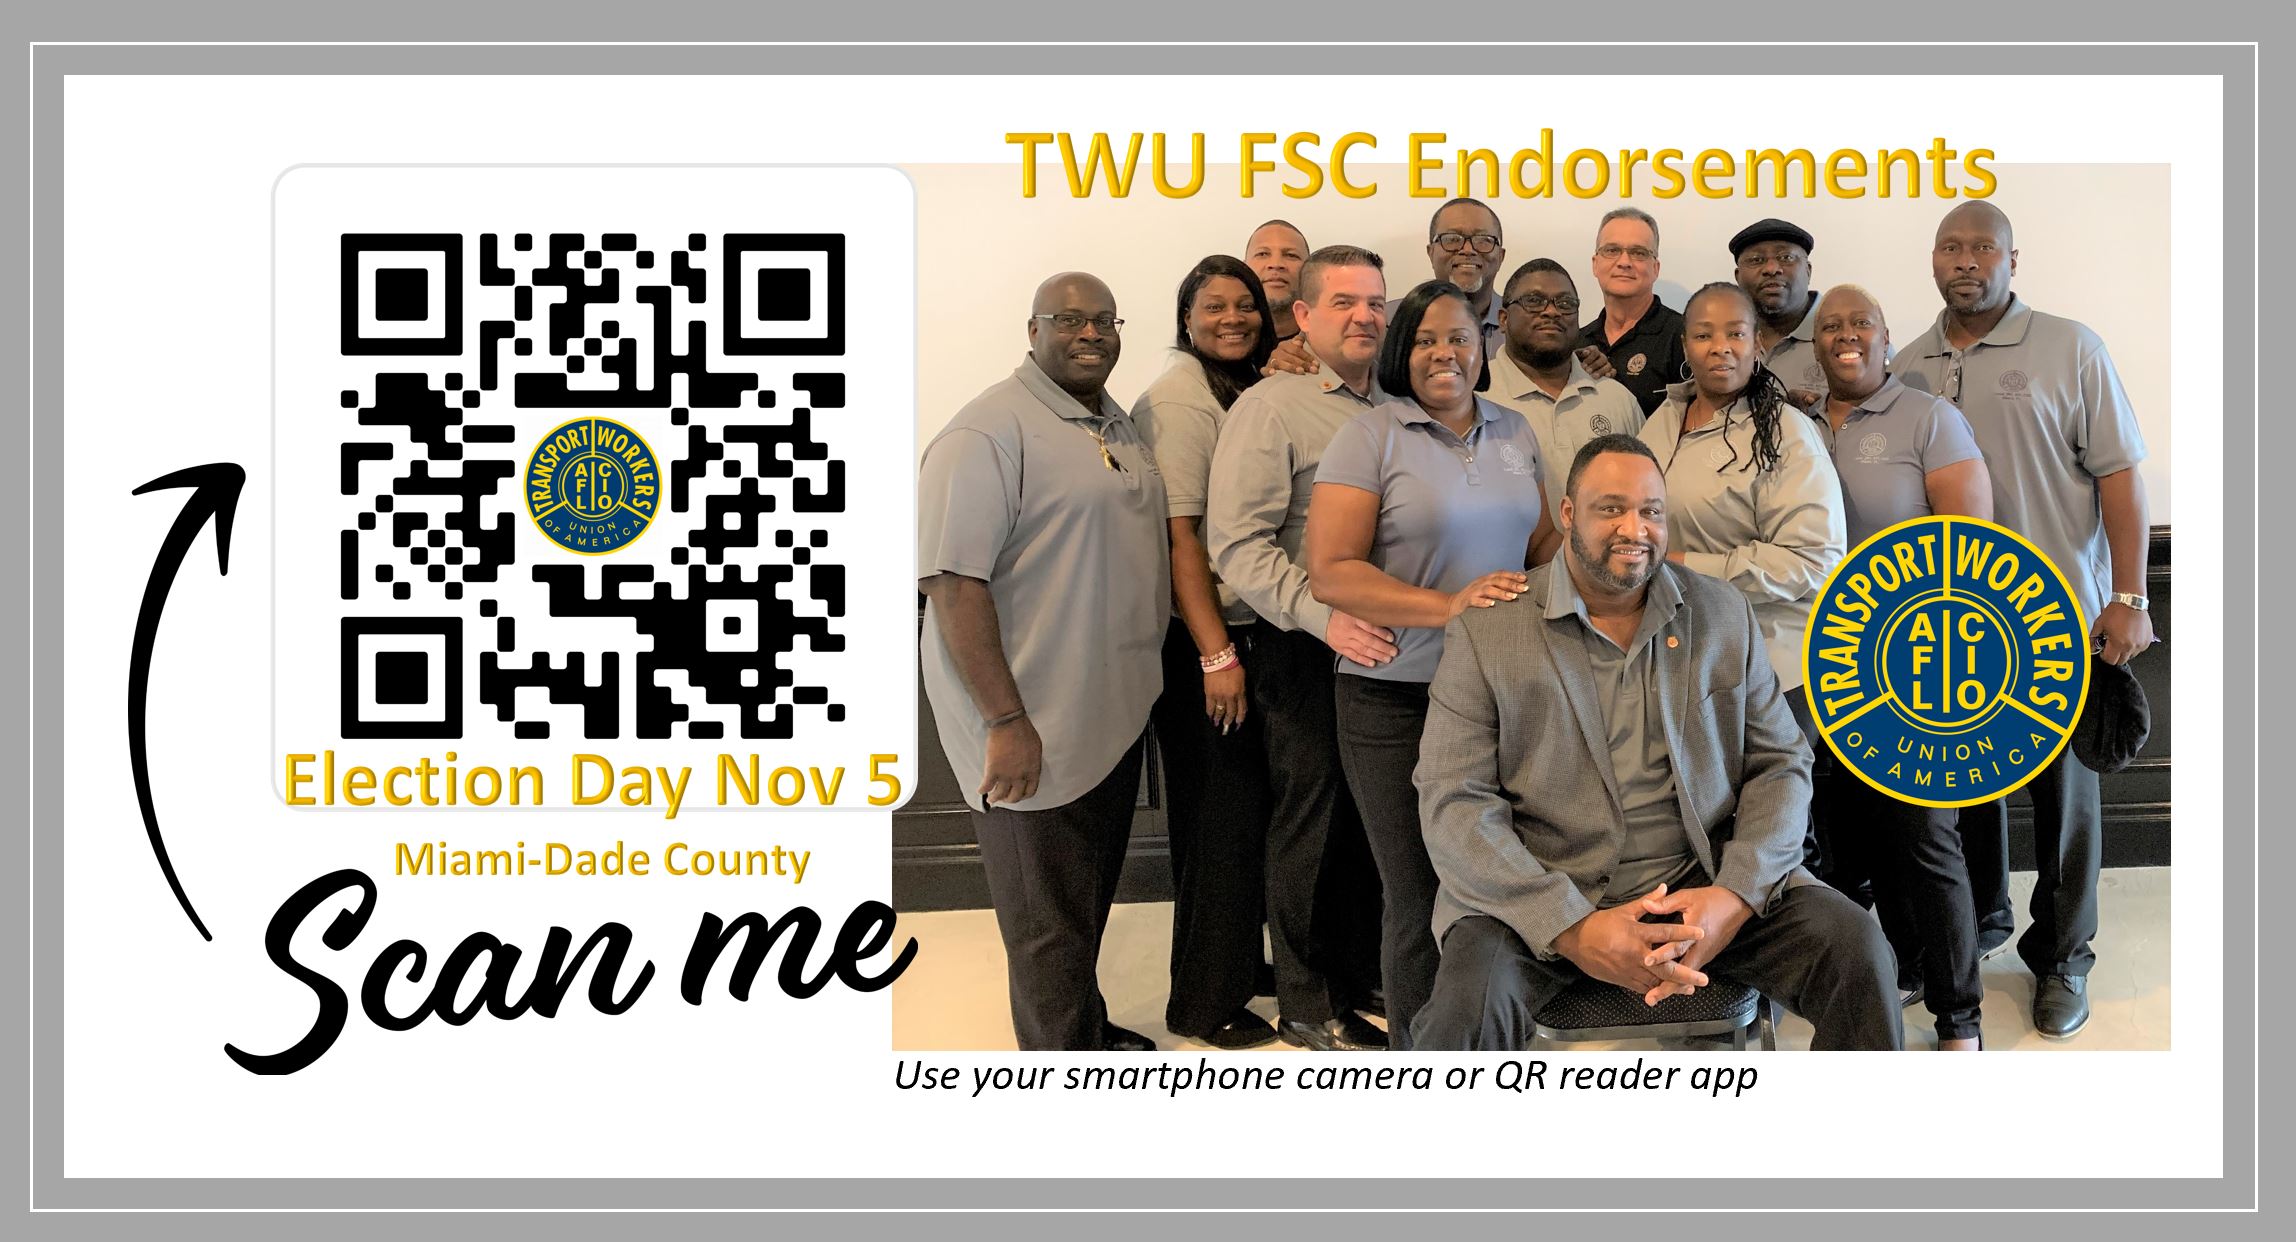 TWU FSC Endorsements - Election Day Nov 5th, 2019